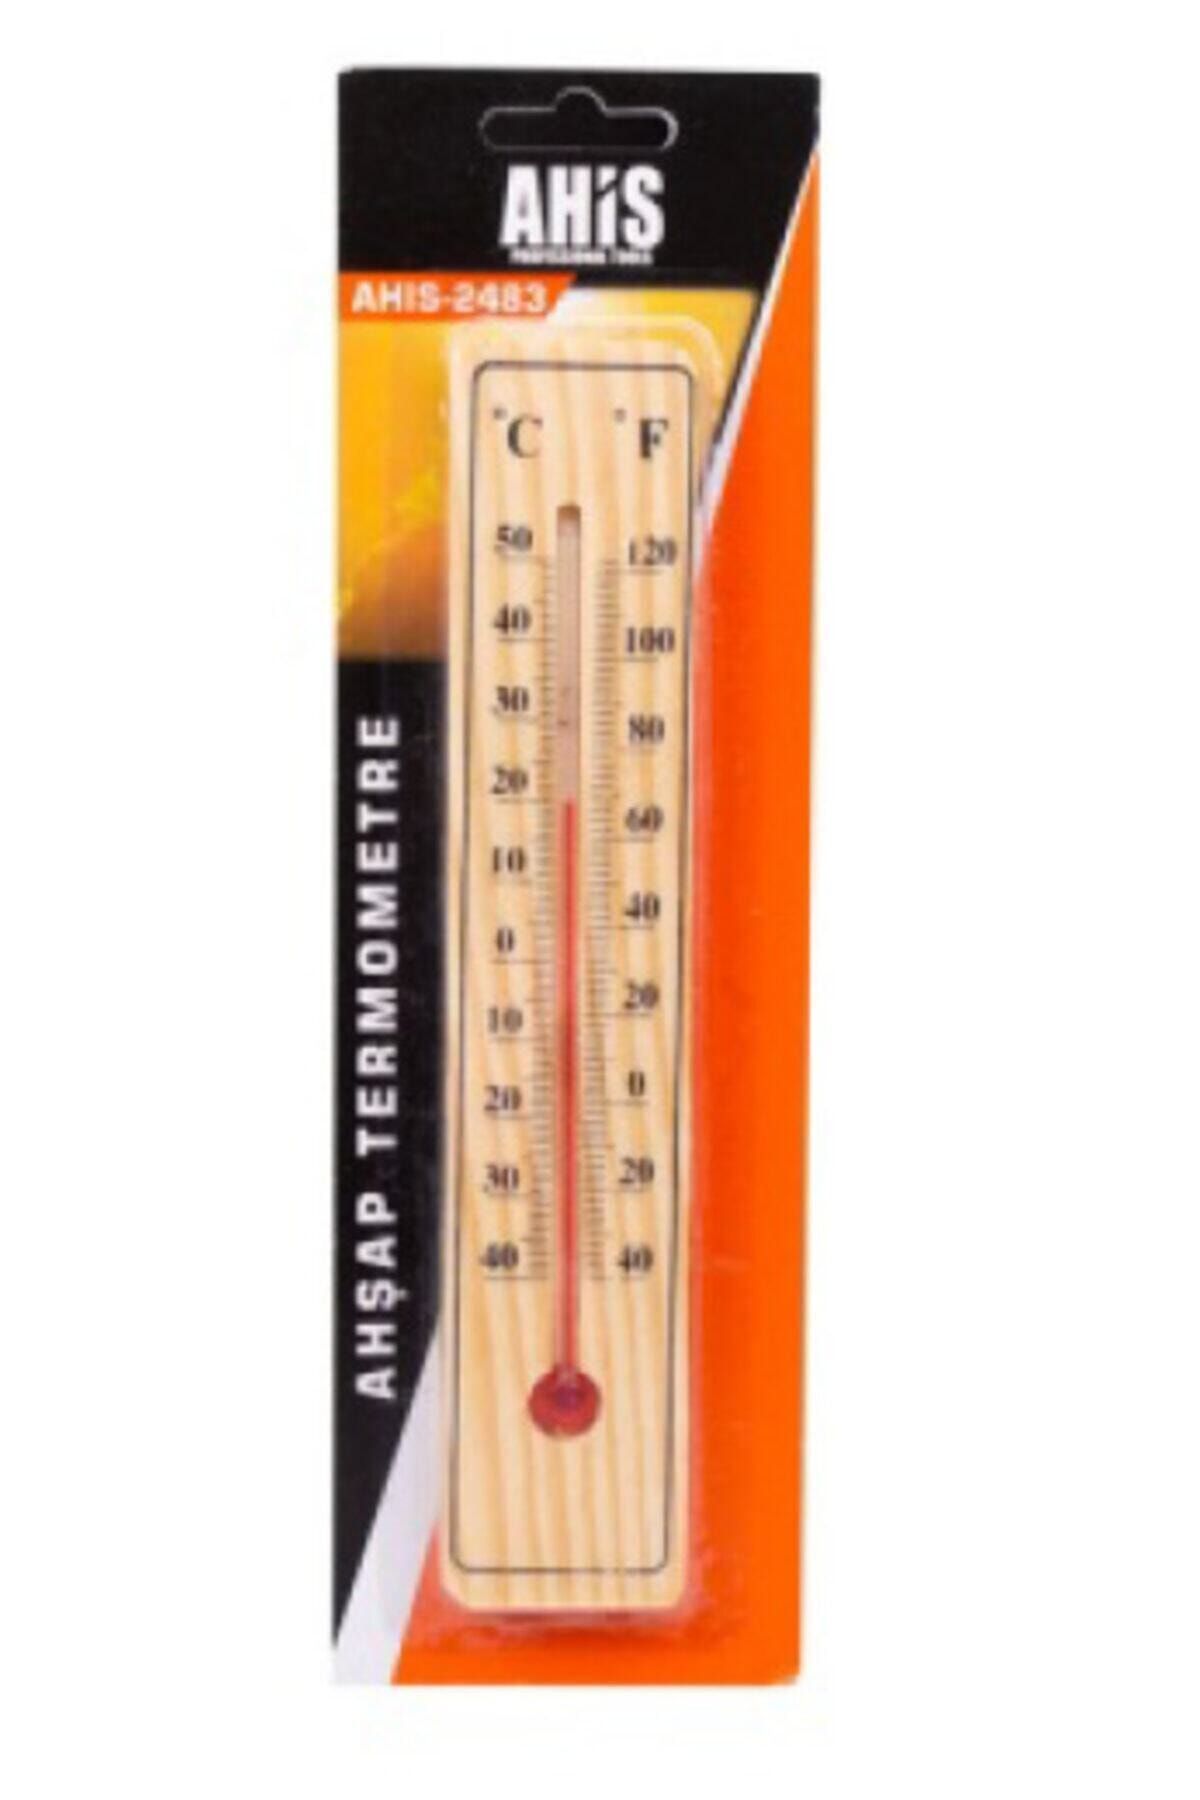 Ahis Derece Termometre Ahşap Duvar Tipi Ahs-2483 3691